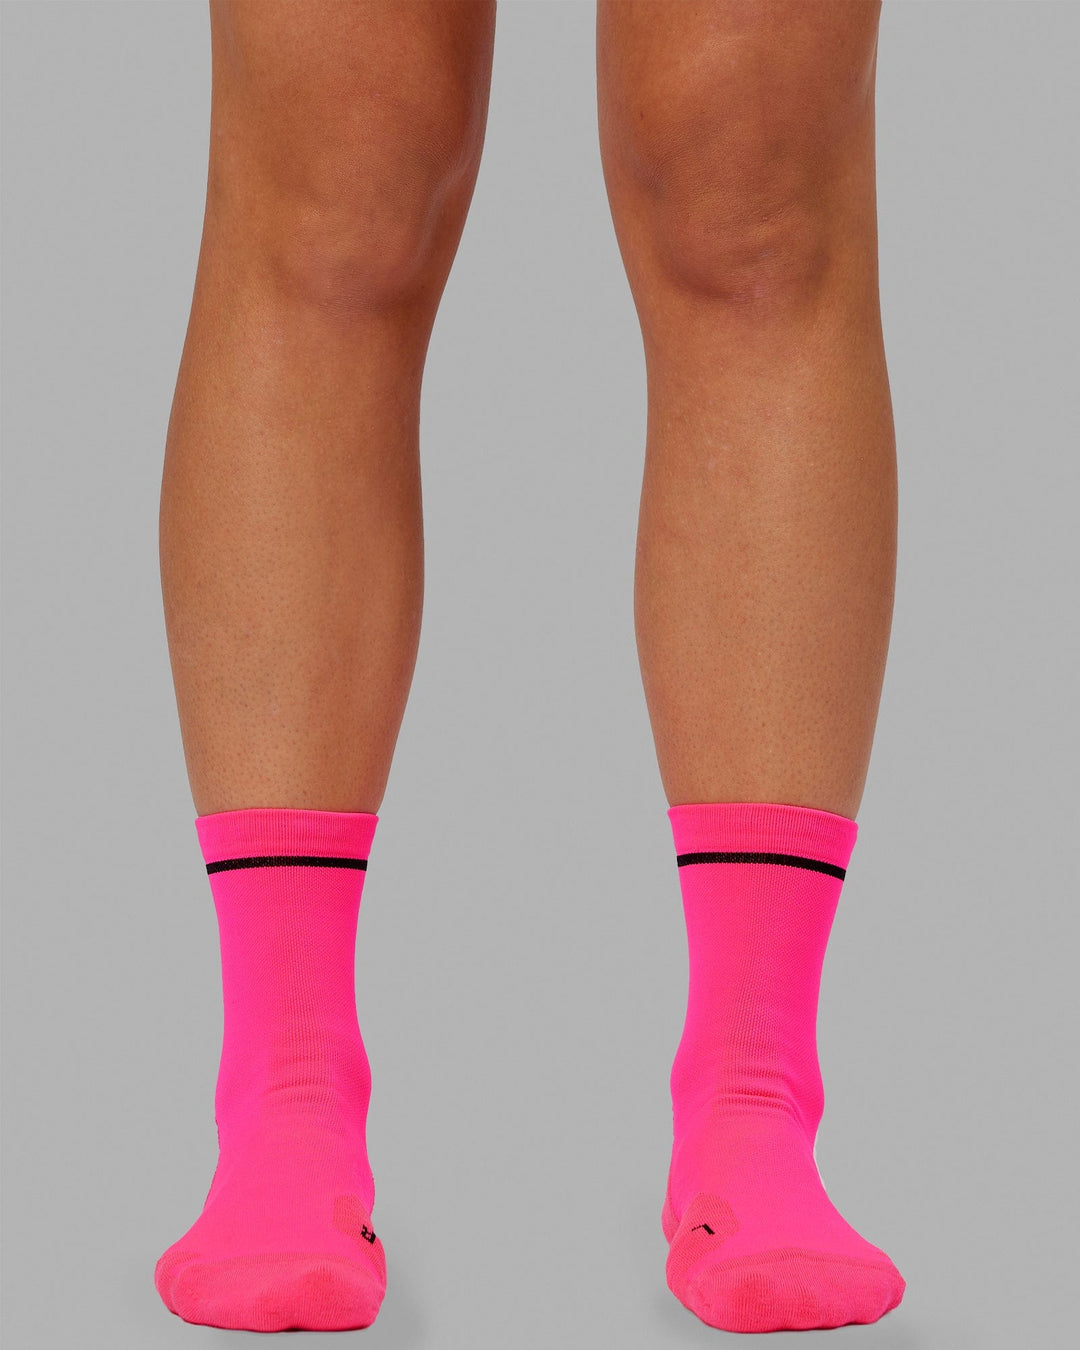 Fast Performance Quarter Socks - Neon Pink-Black